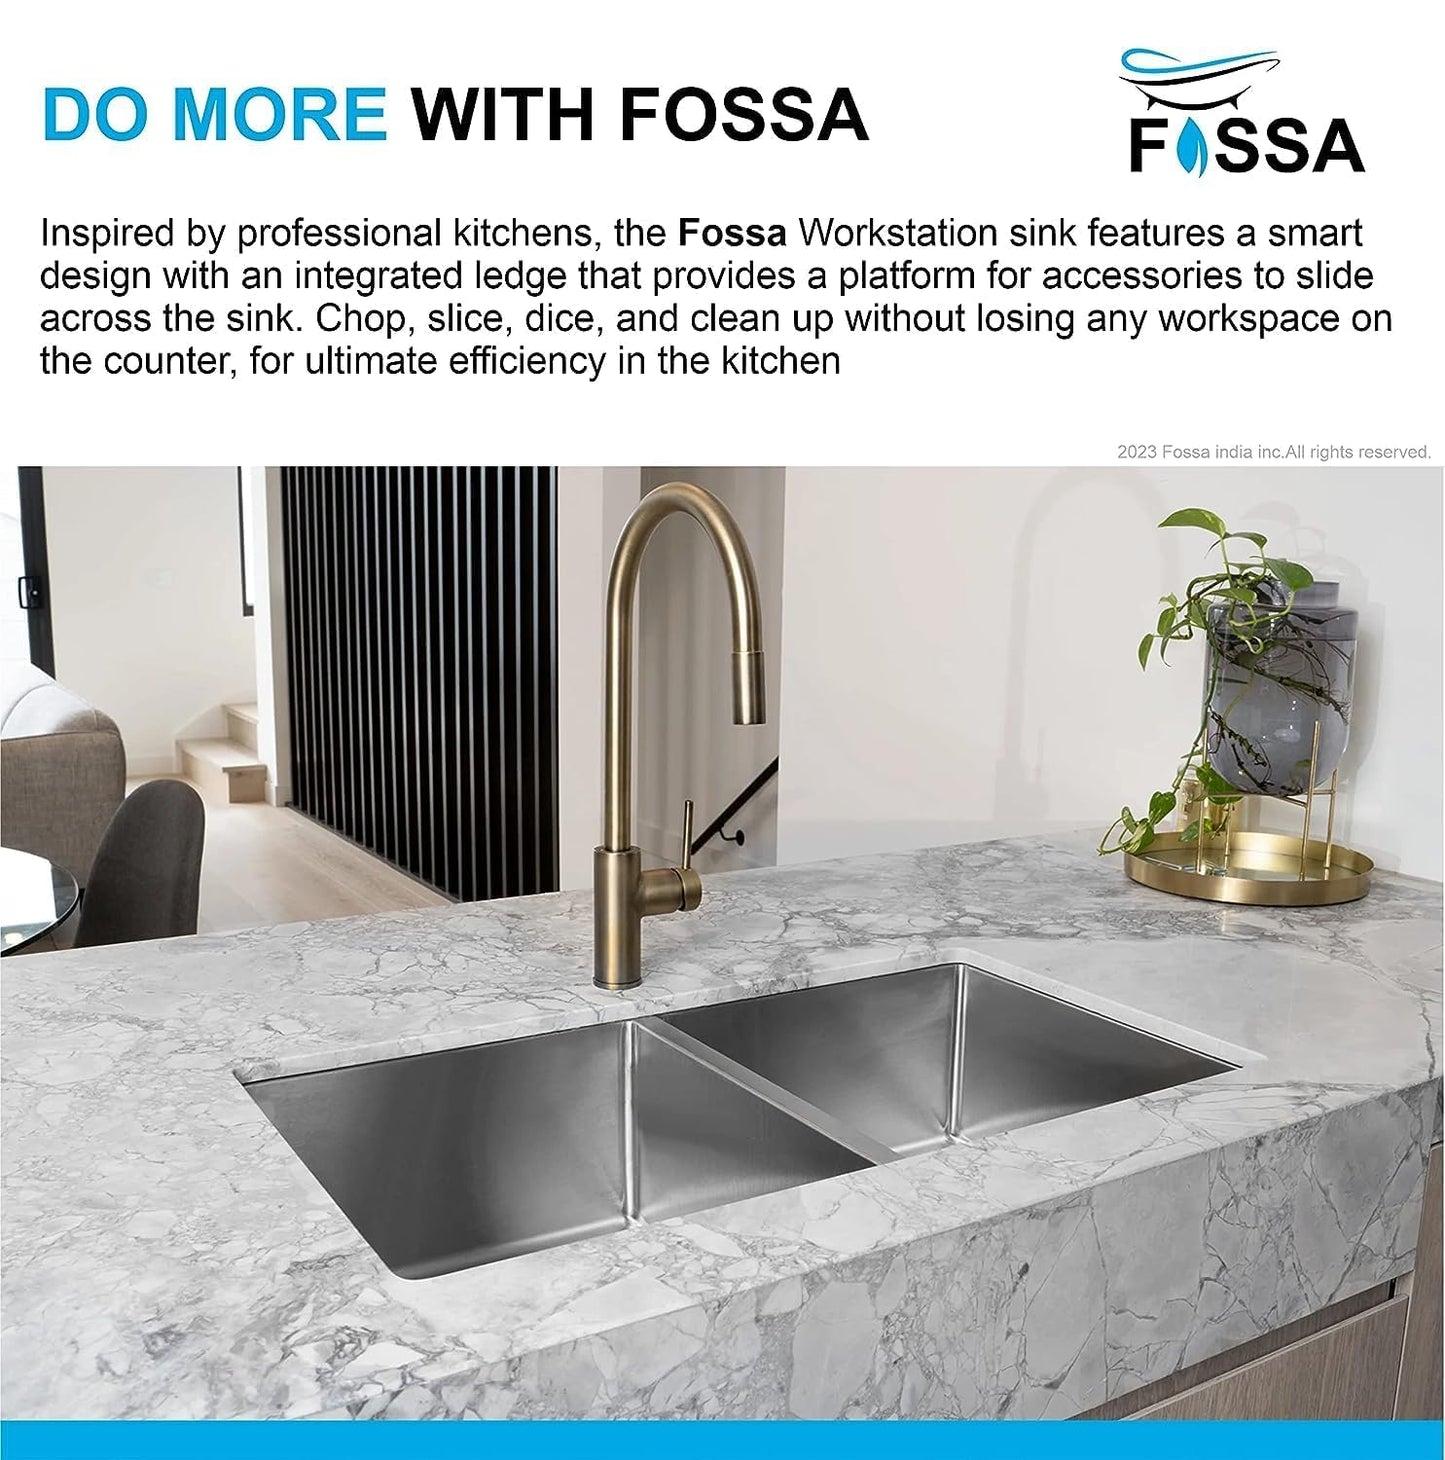 Fossa 32"x18"x10" Double Bowl SS-304 Grade Stainless Steel Handmade Kitchen Sink Round Coupling Matte Finish FS-022R